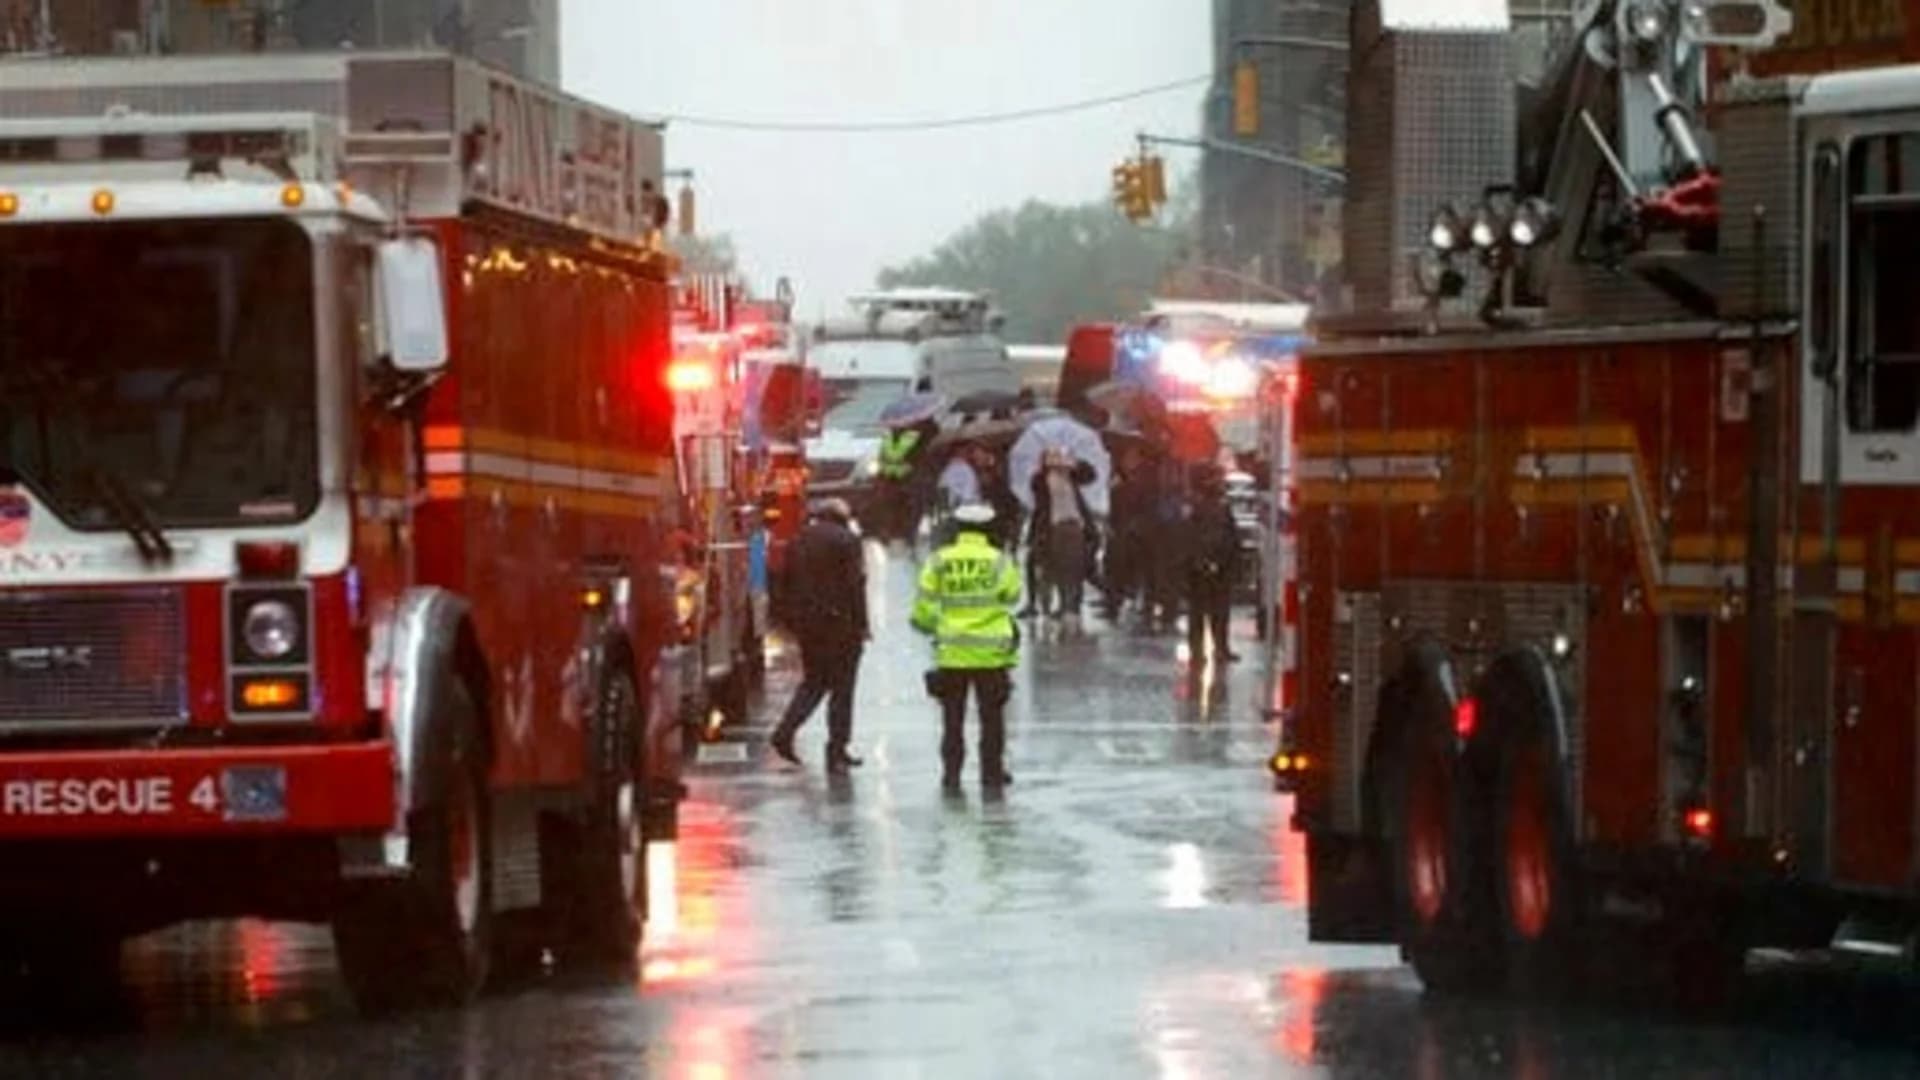 PHOTOS: Scene of helicopter crash in Manhattan